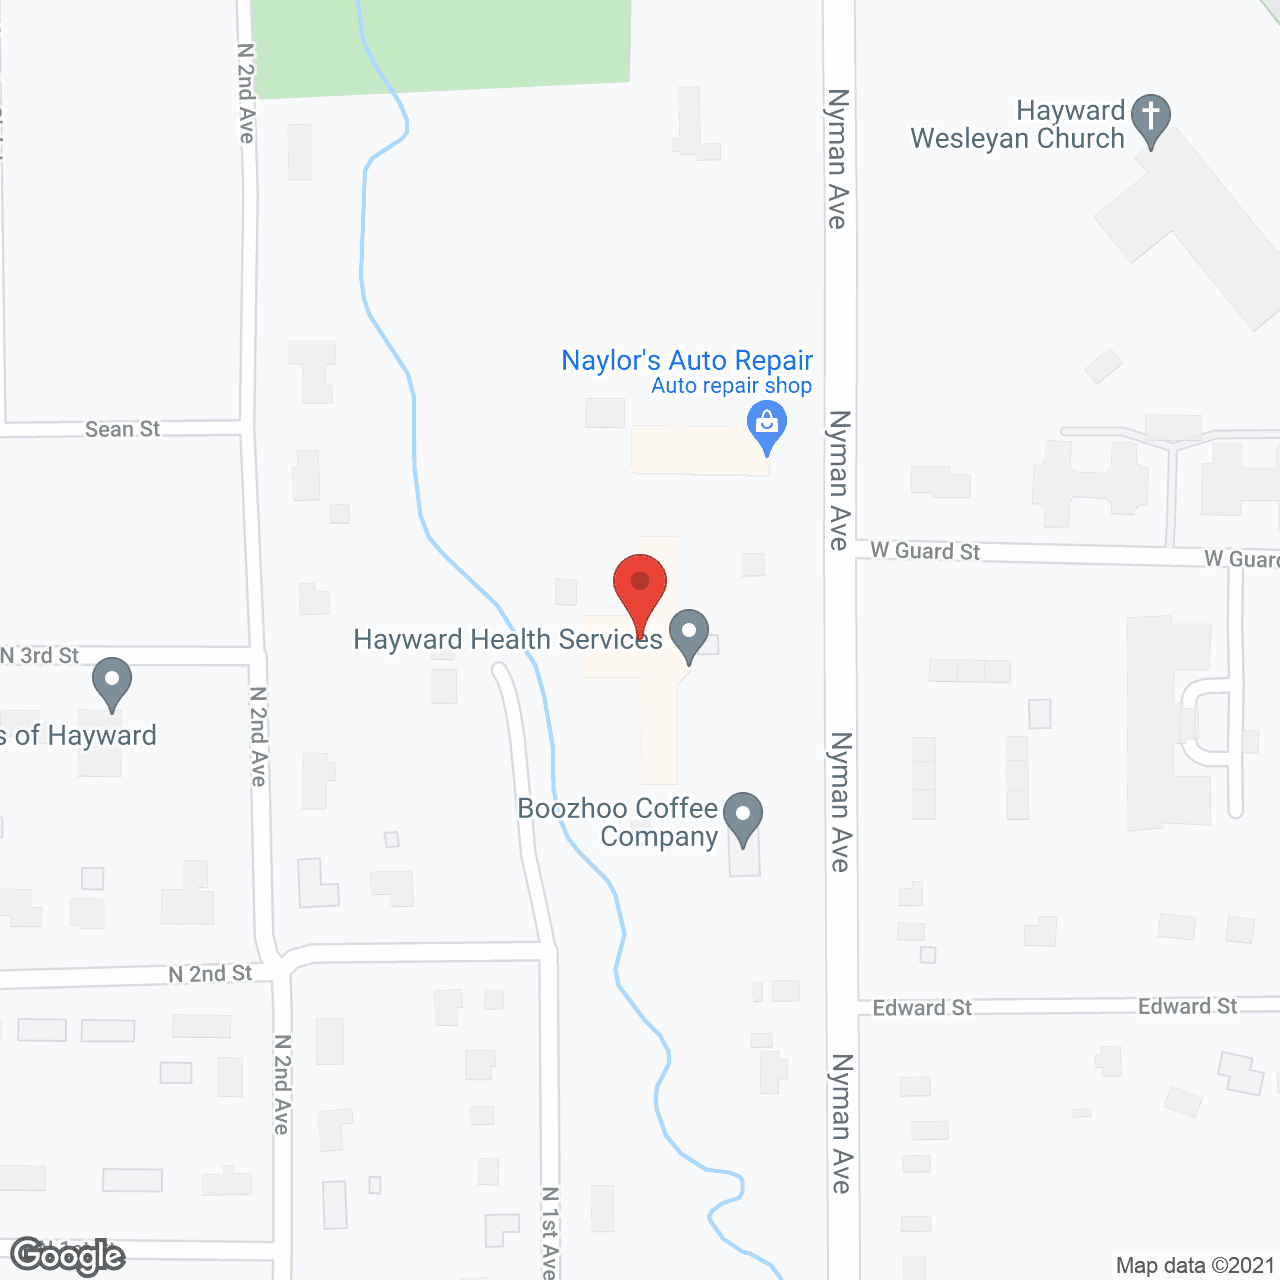 Golden Living Center – Valley of Hayward in google map